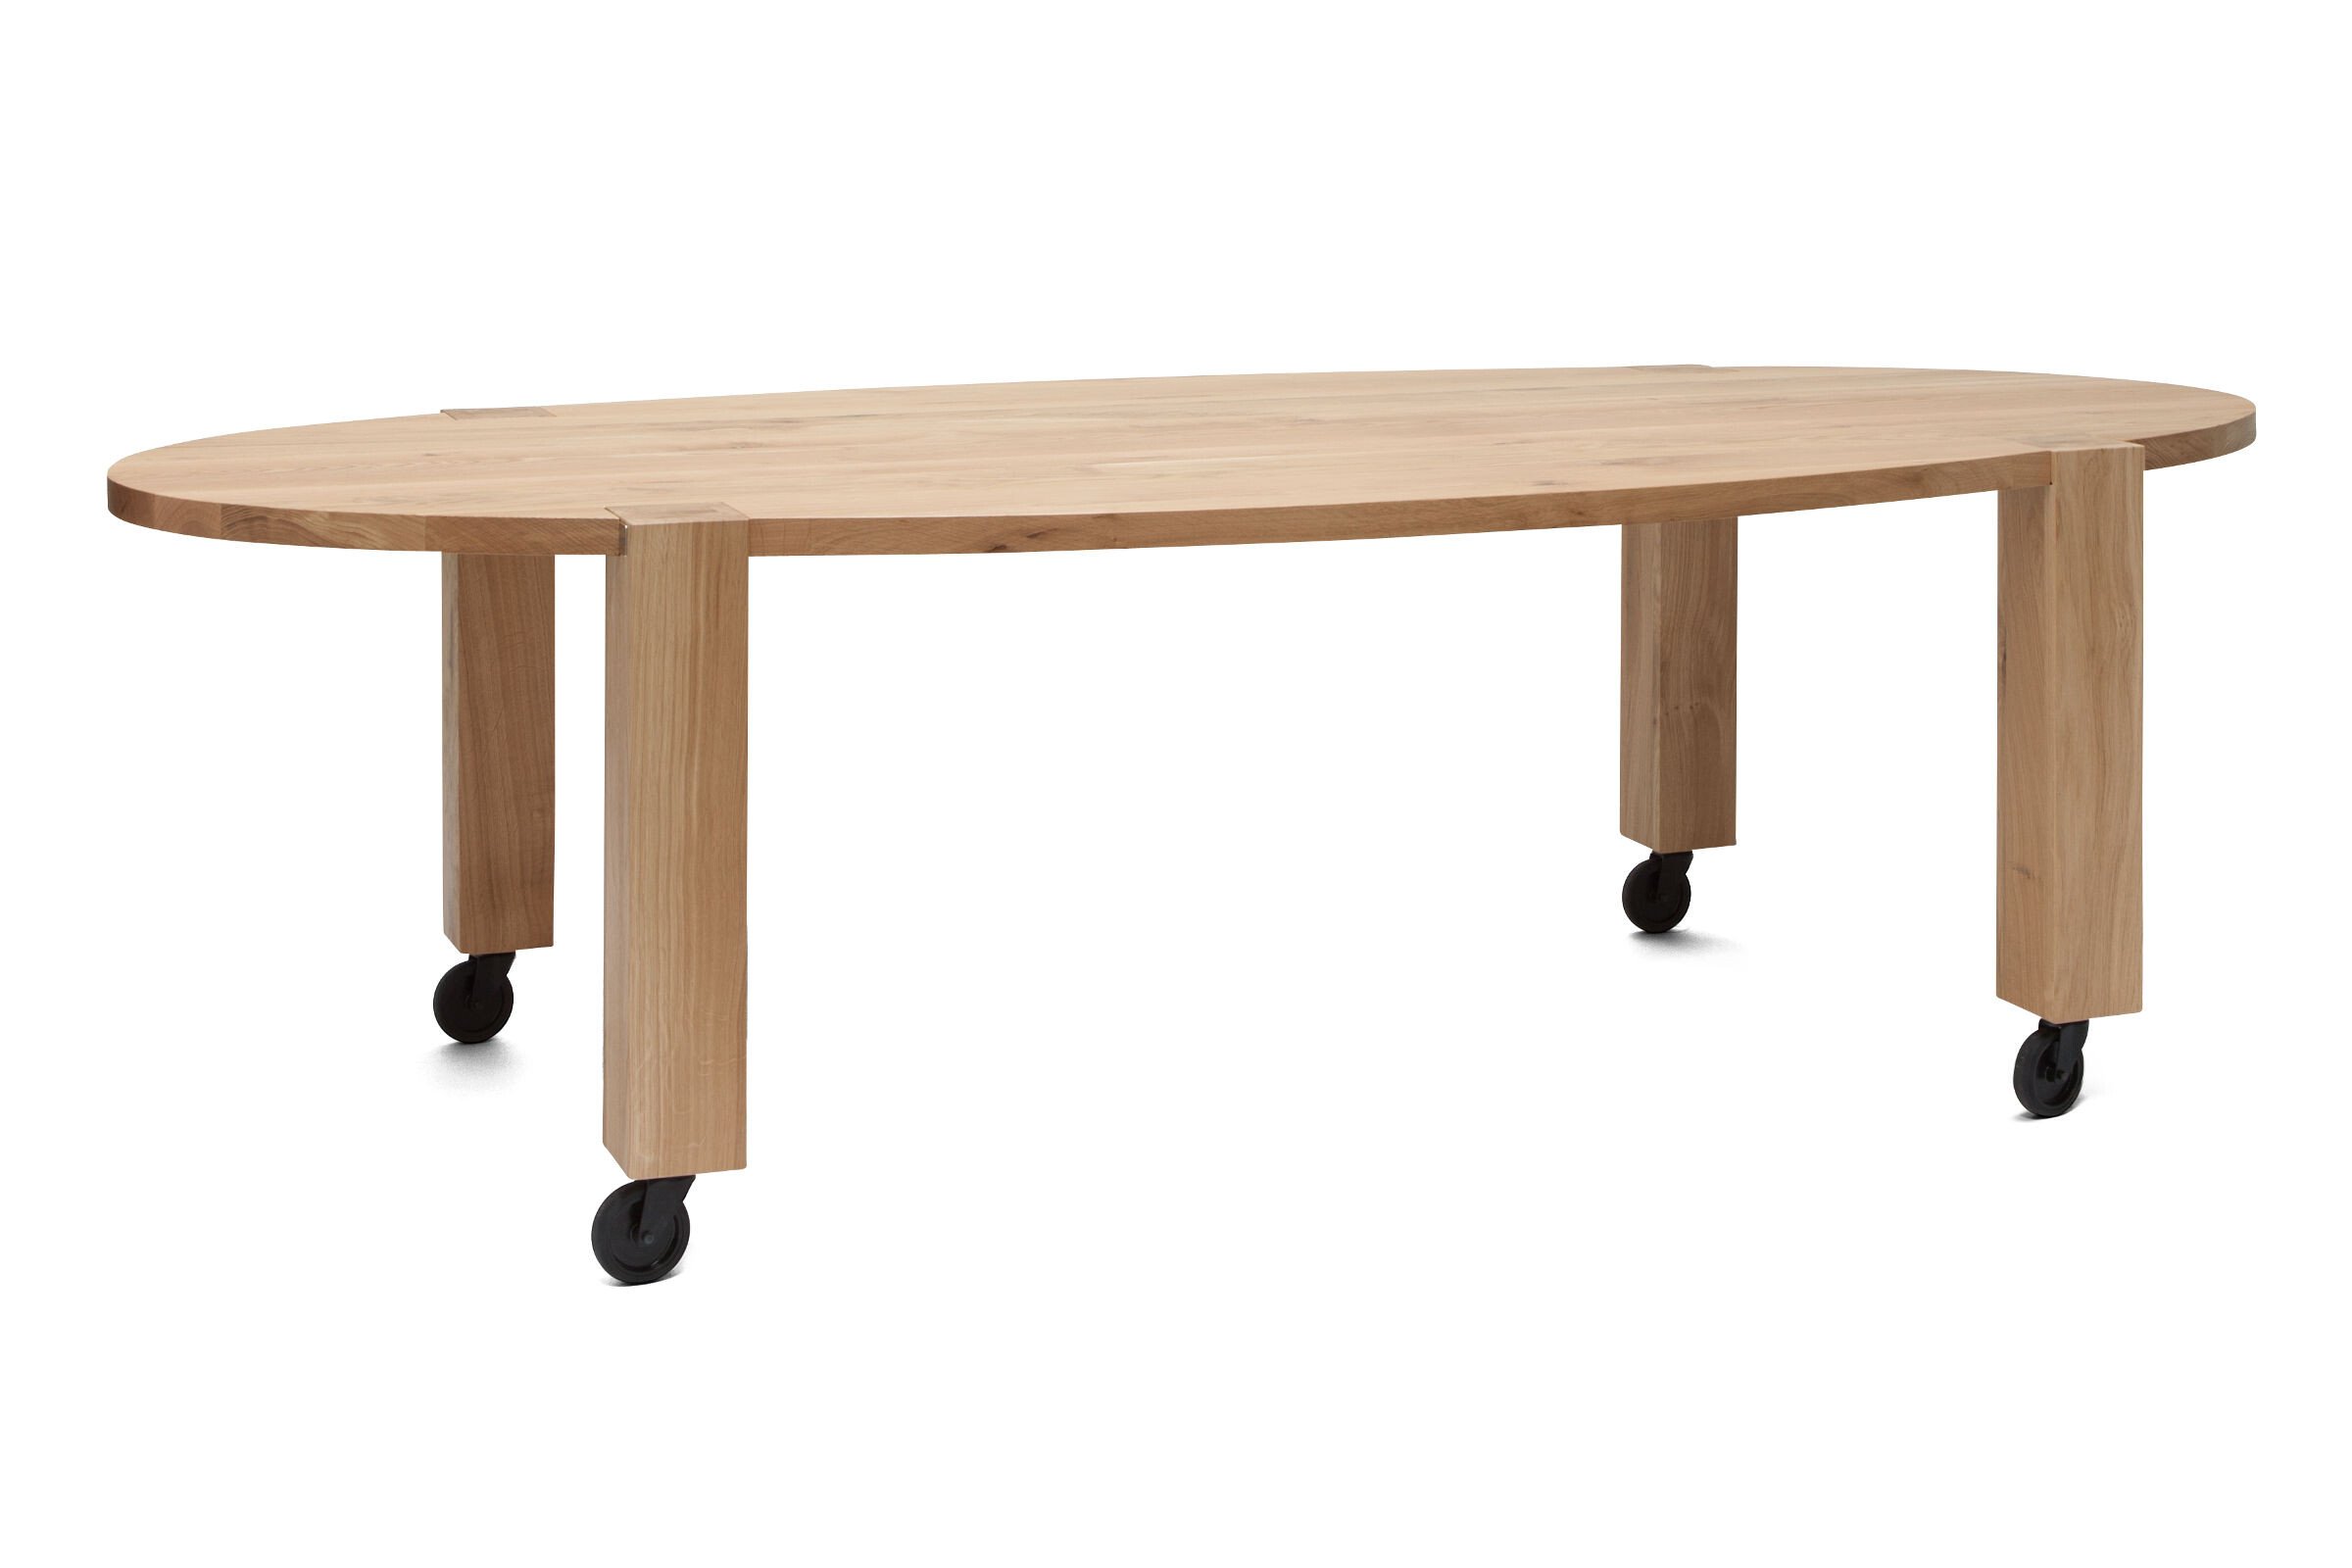 Move houten tafel (B2B) - De Projectinrichter